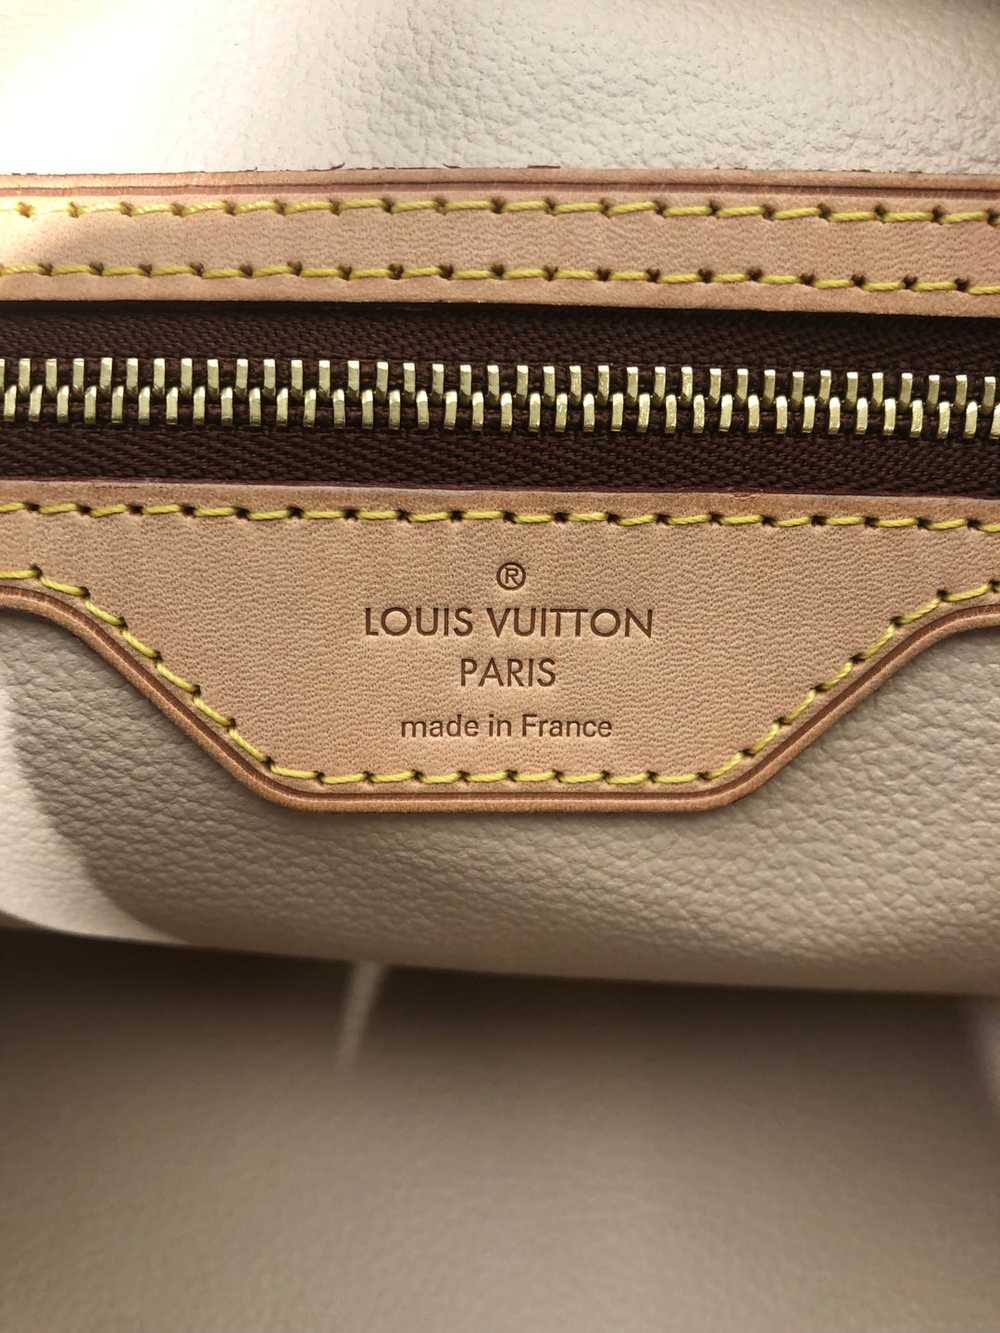 LOUIS VUITTON/Tote Bag/Monogram/Leather/BRW/BUCKE… - image 5